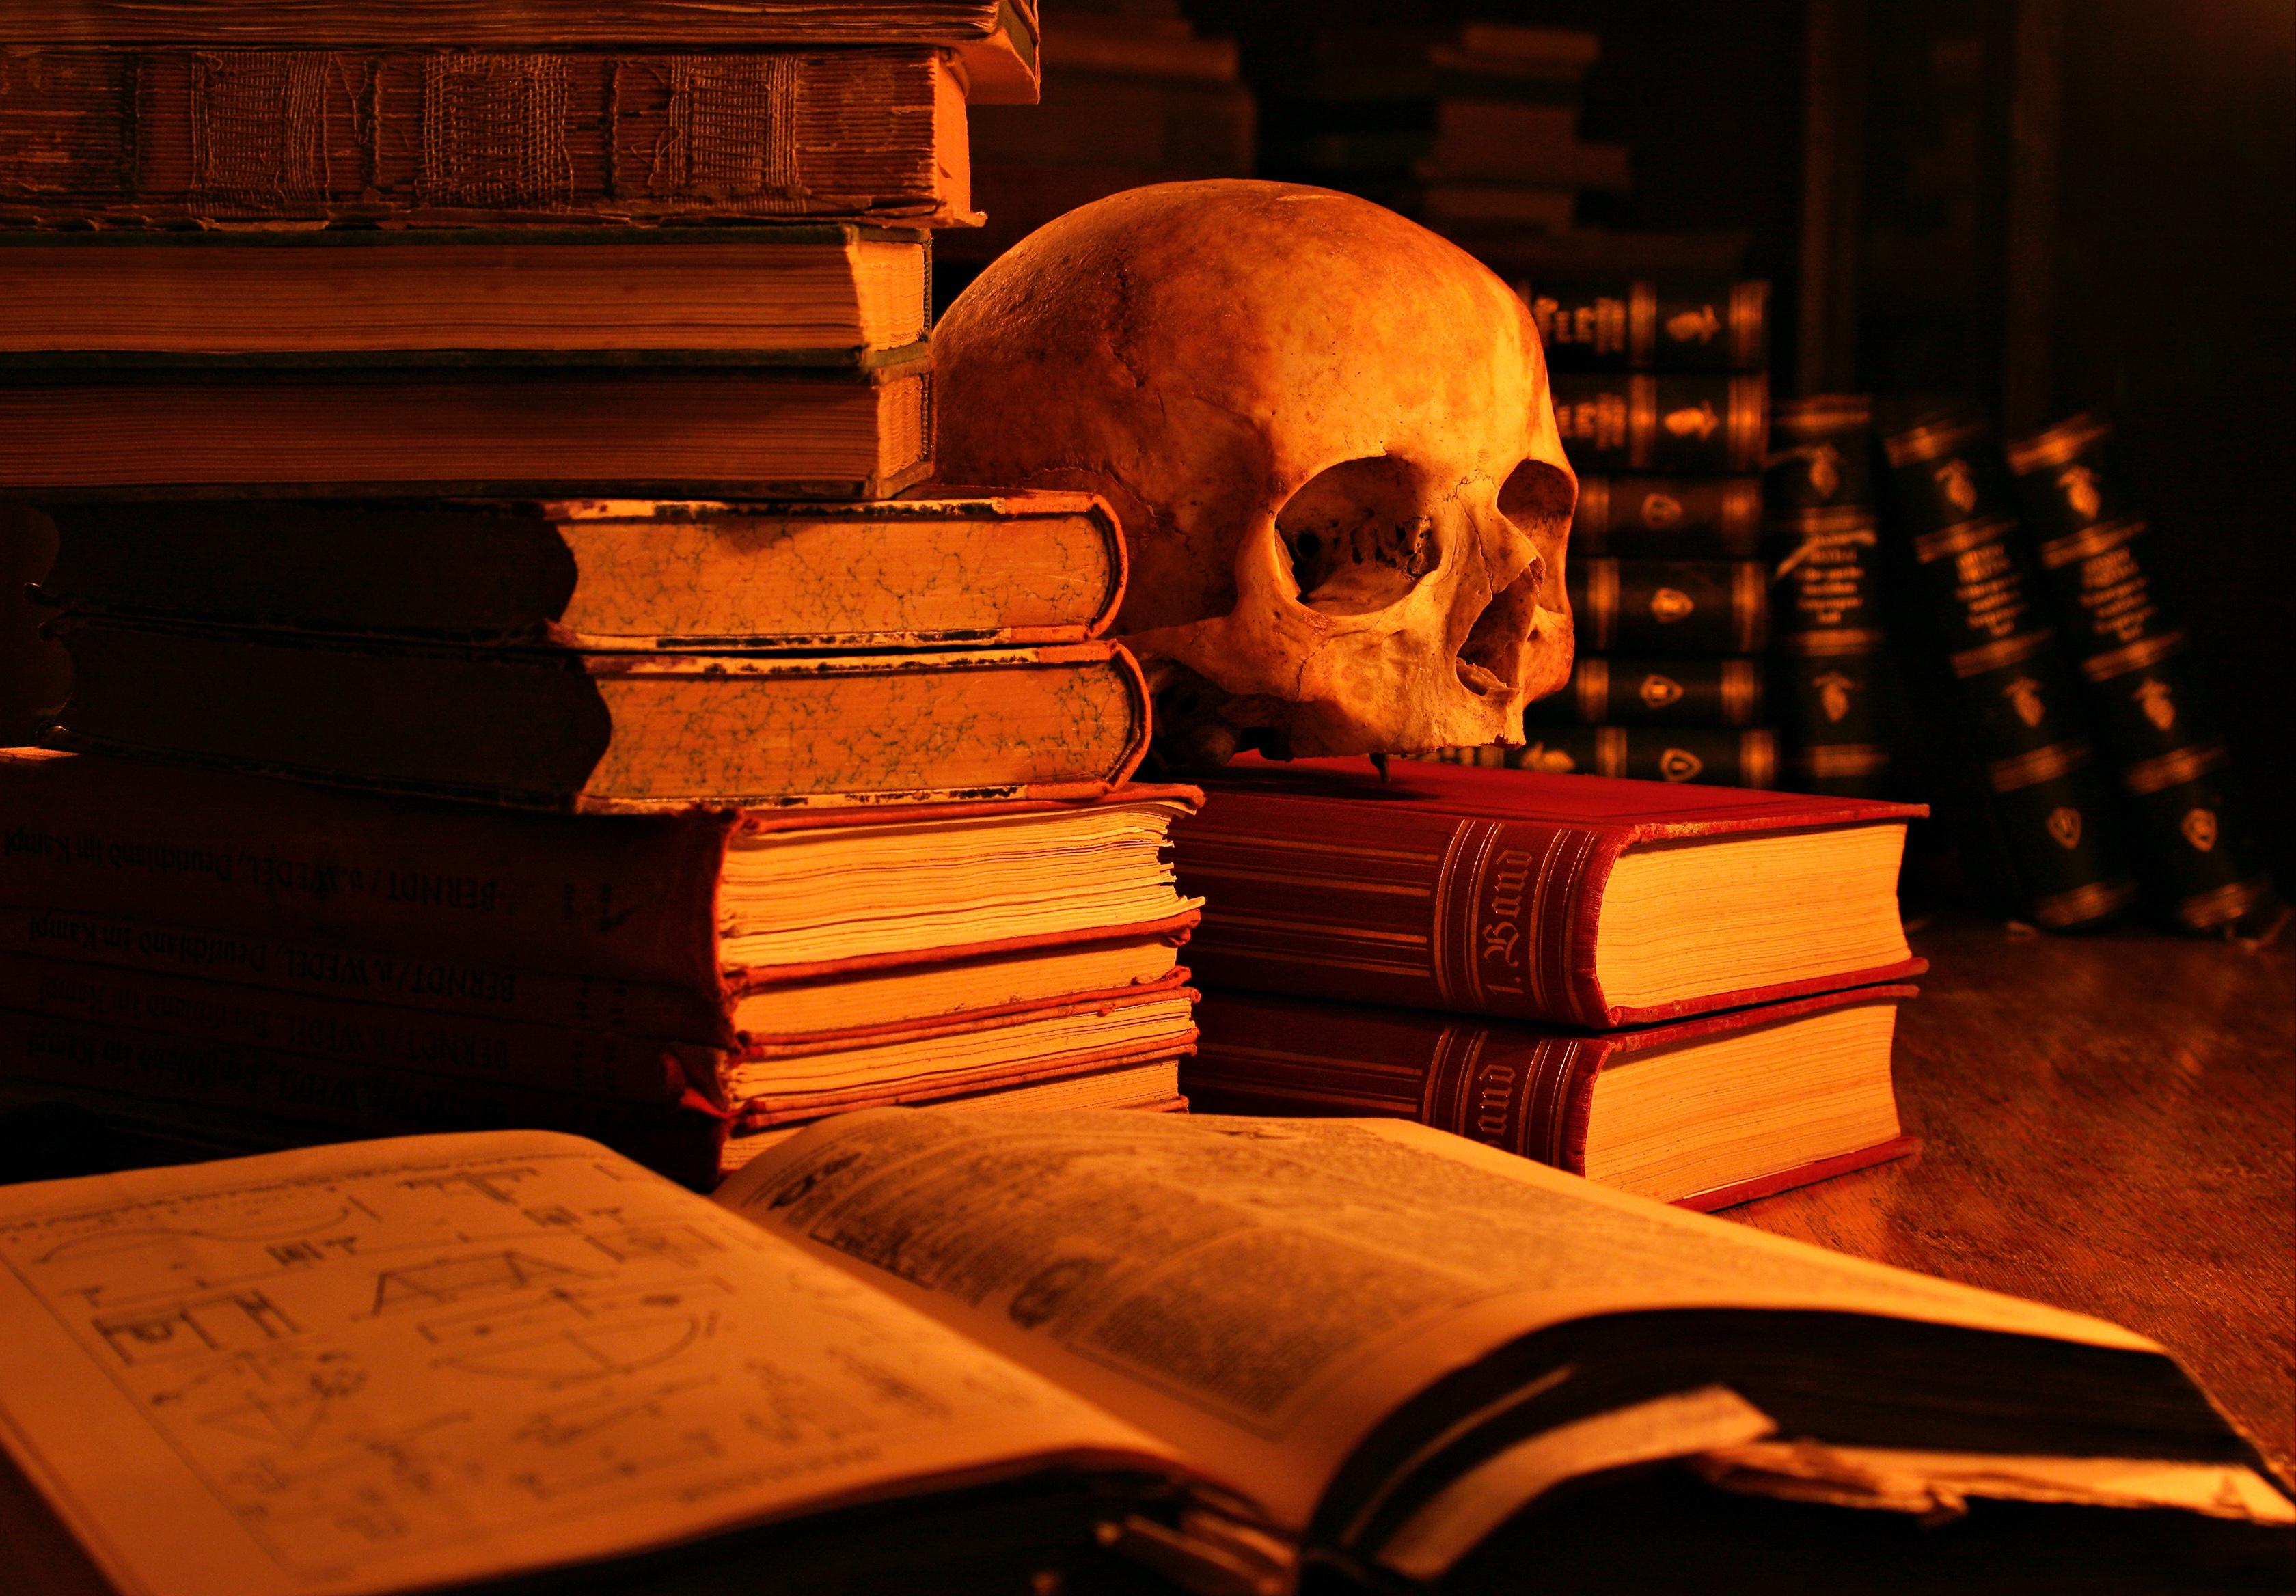 Spooky books